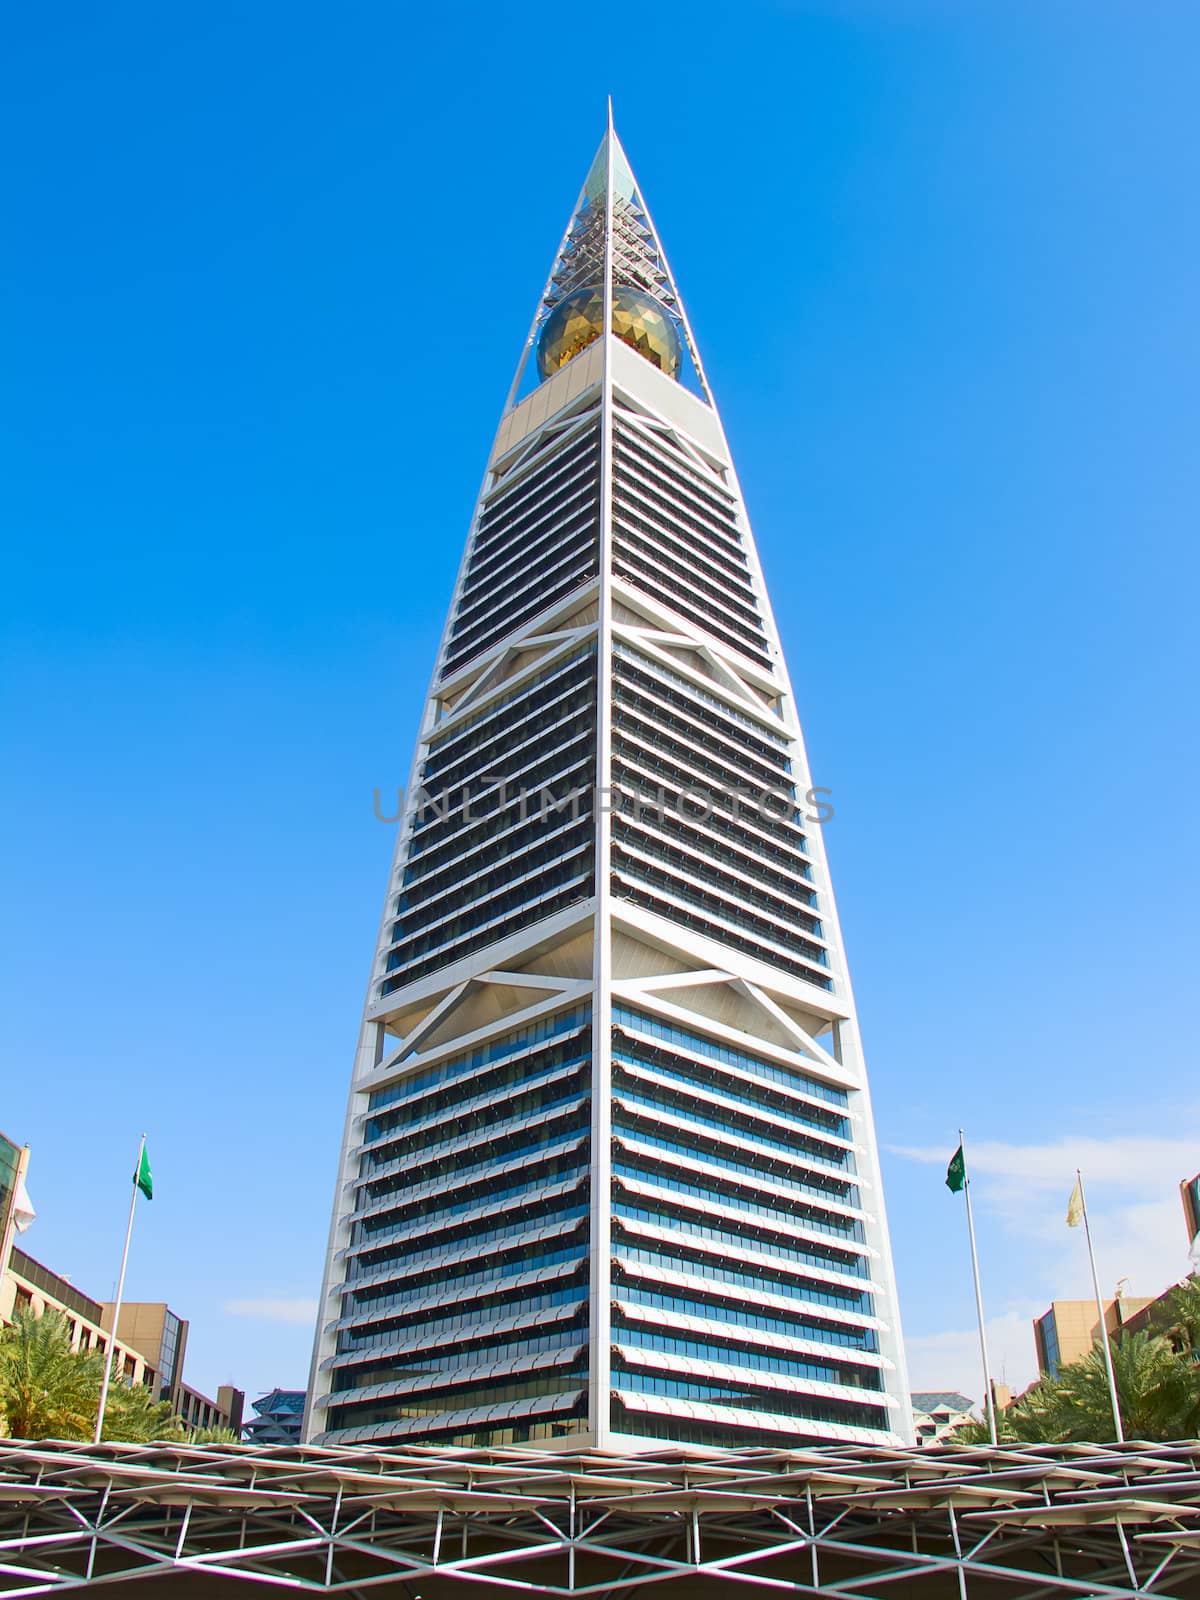 Al Faisaliah tower by swisshippo